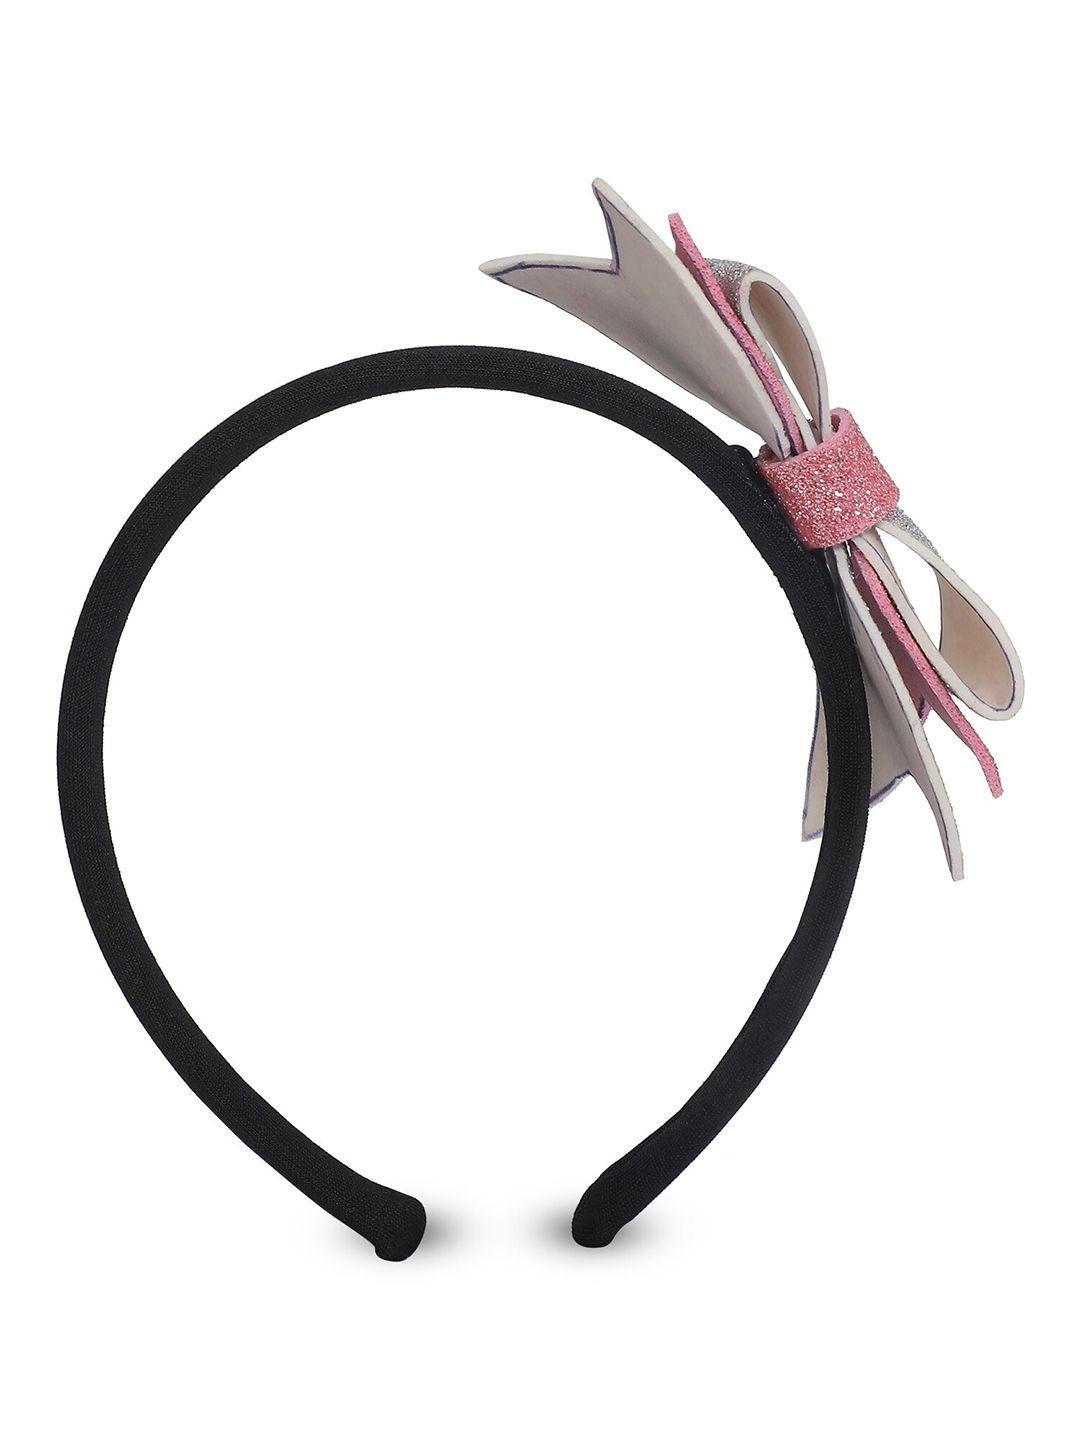 samsara couture girls silver-toned & pink embellished hairband